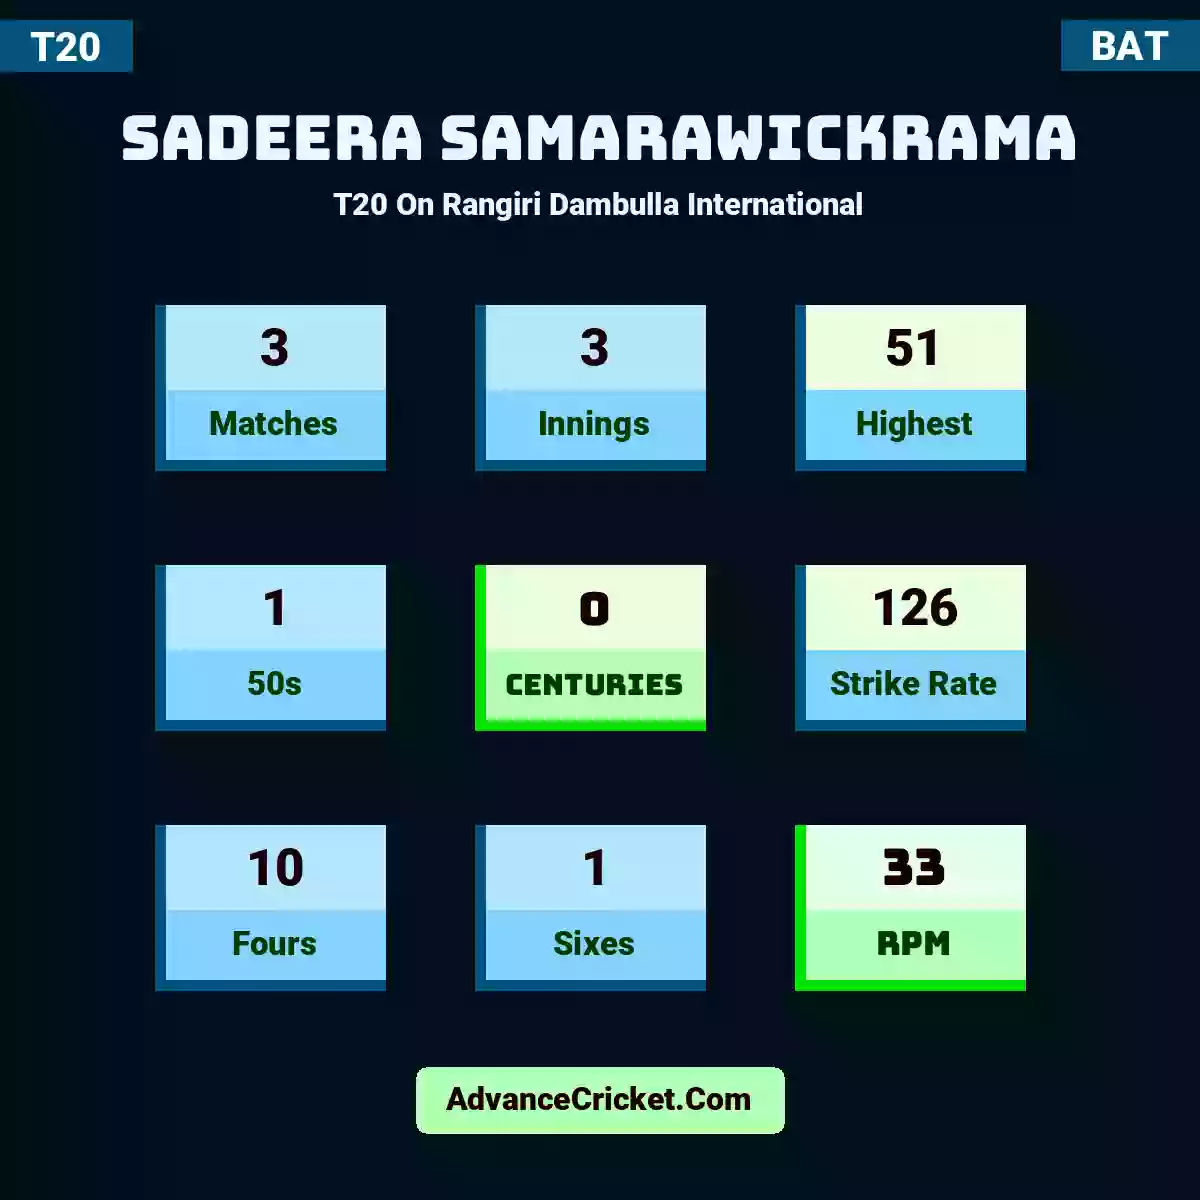 Sadeera Samarawickrama T20  On Rangiri Dambulla International, Sadeera Samarawickrama played 3 matches, scored 51 runs as highest, 1 half-centuries, and 0 centuries, with a strike rate of 126. S.Samarawickrama hit 10 fours and 1 sixes, with an RPM of 33.